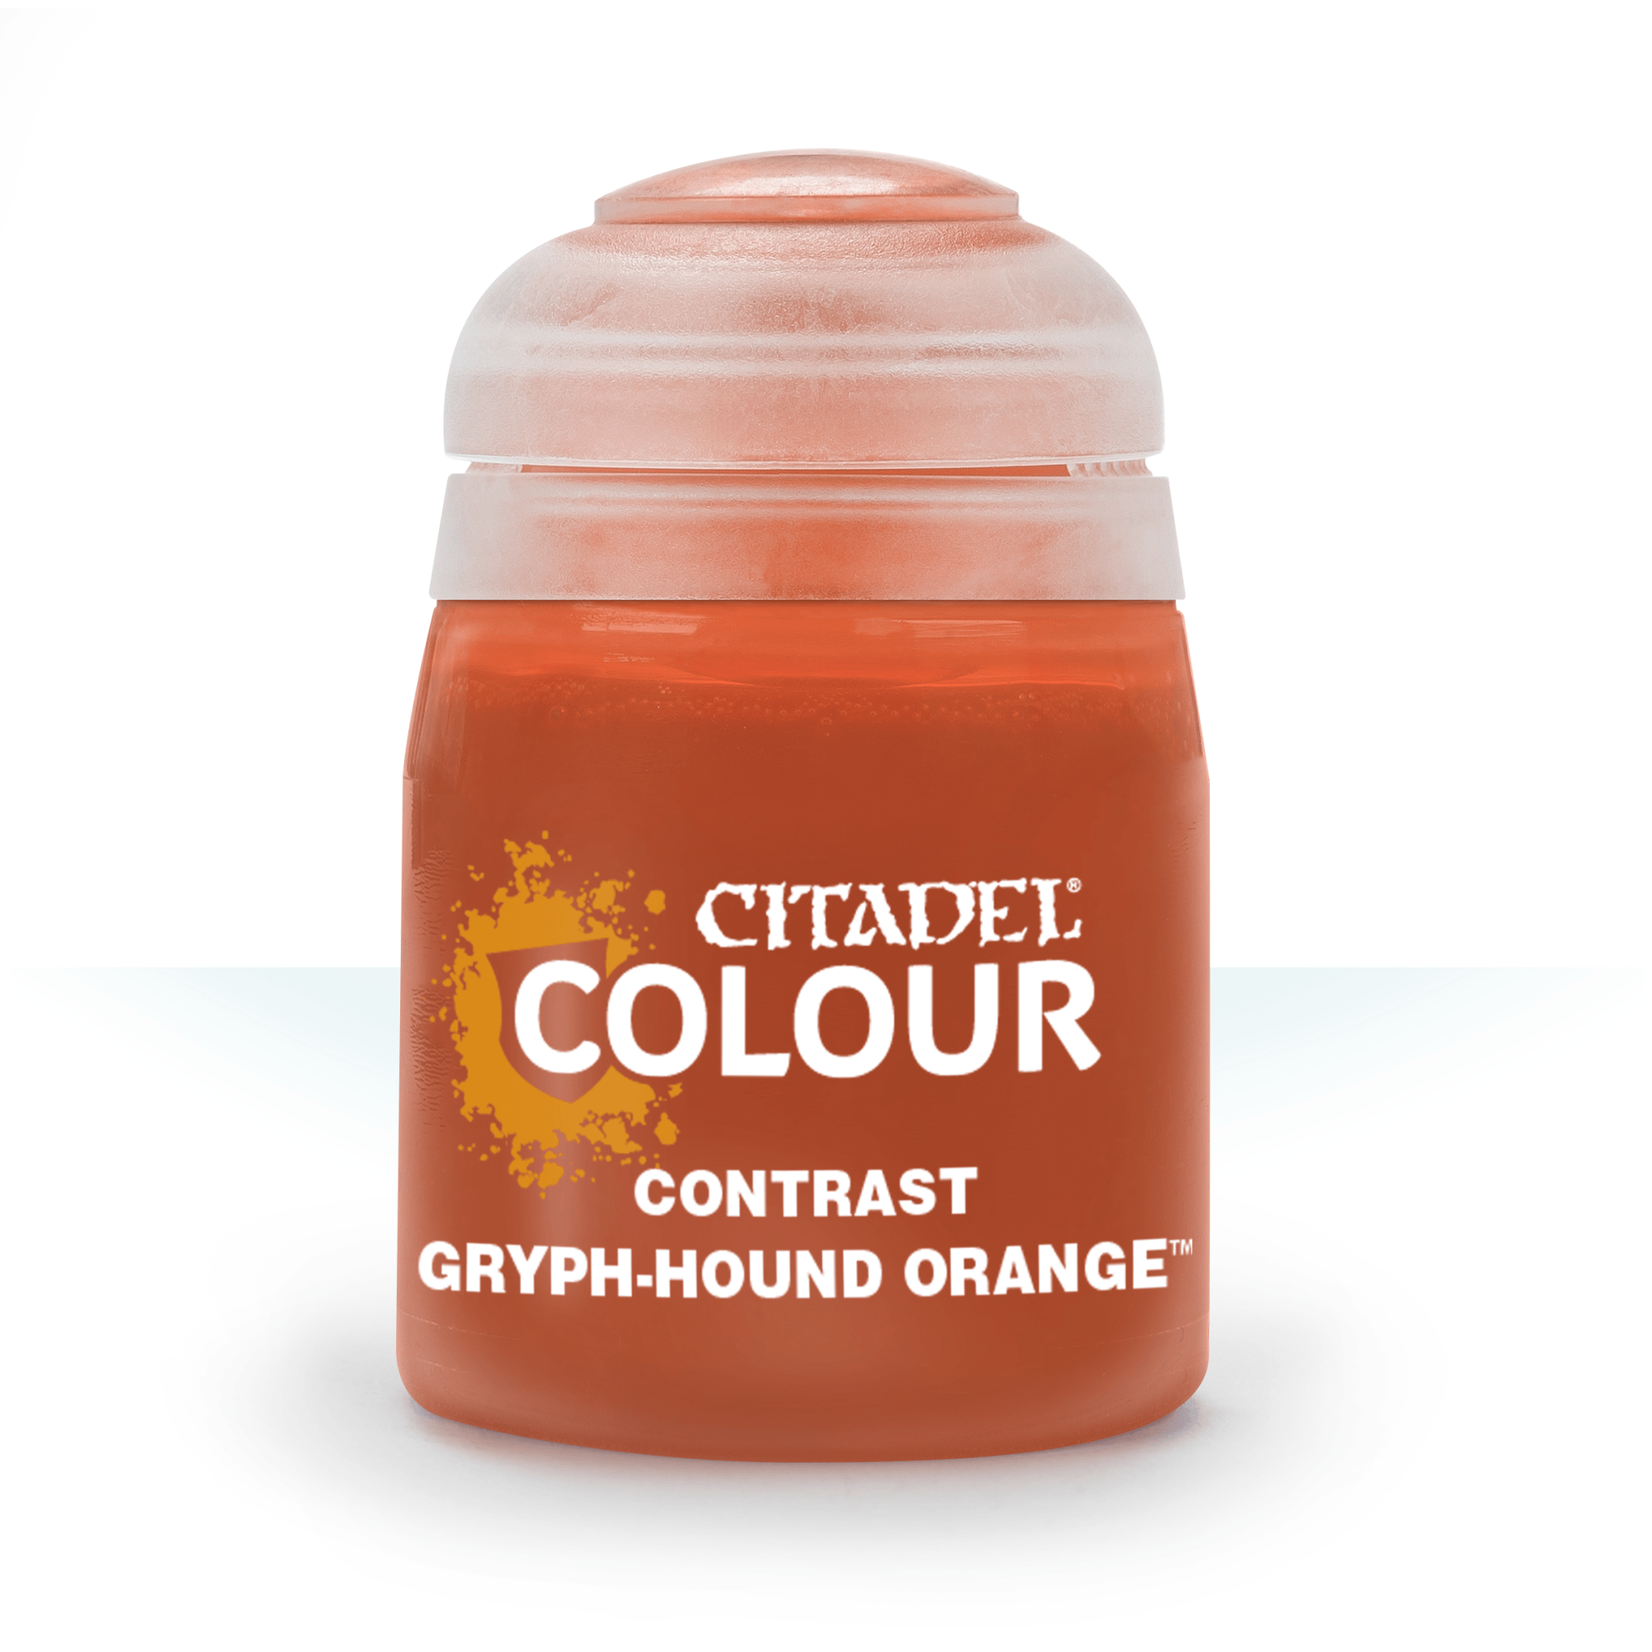 Citadel Contrast Gryph-Hound Orange 18ml pot